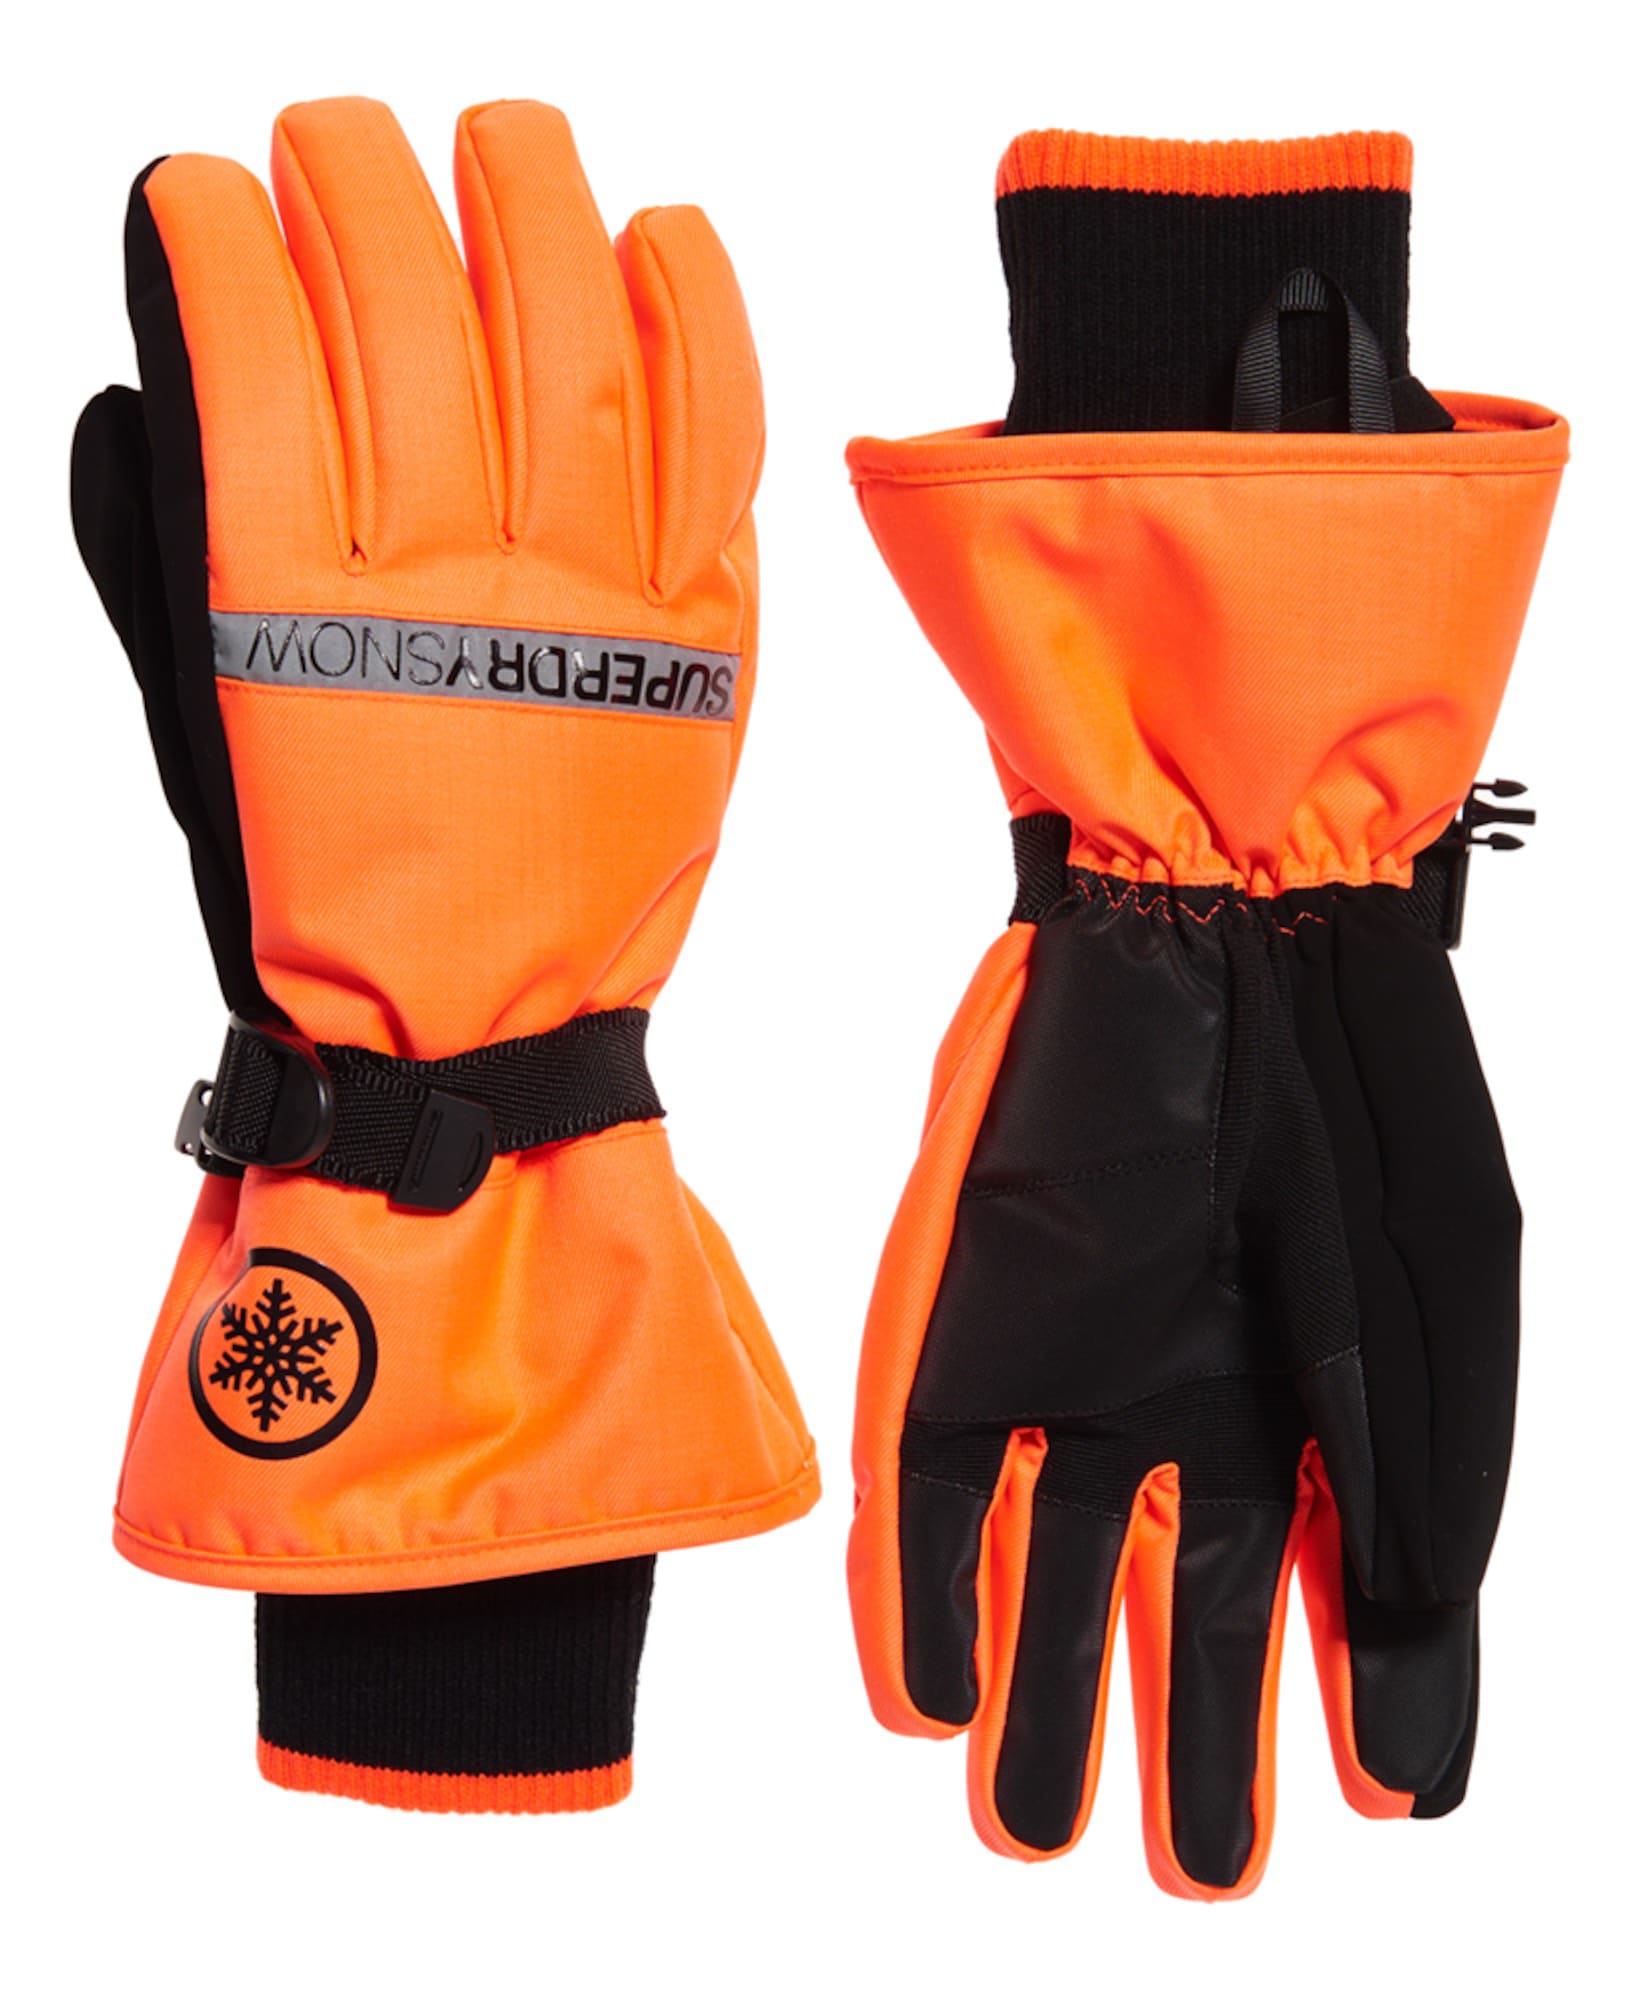 Superdry Snow Sporthandschuh orange / schwarz / grau